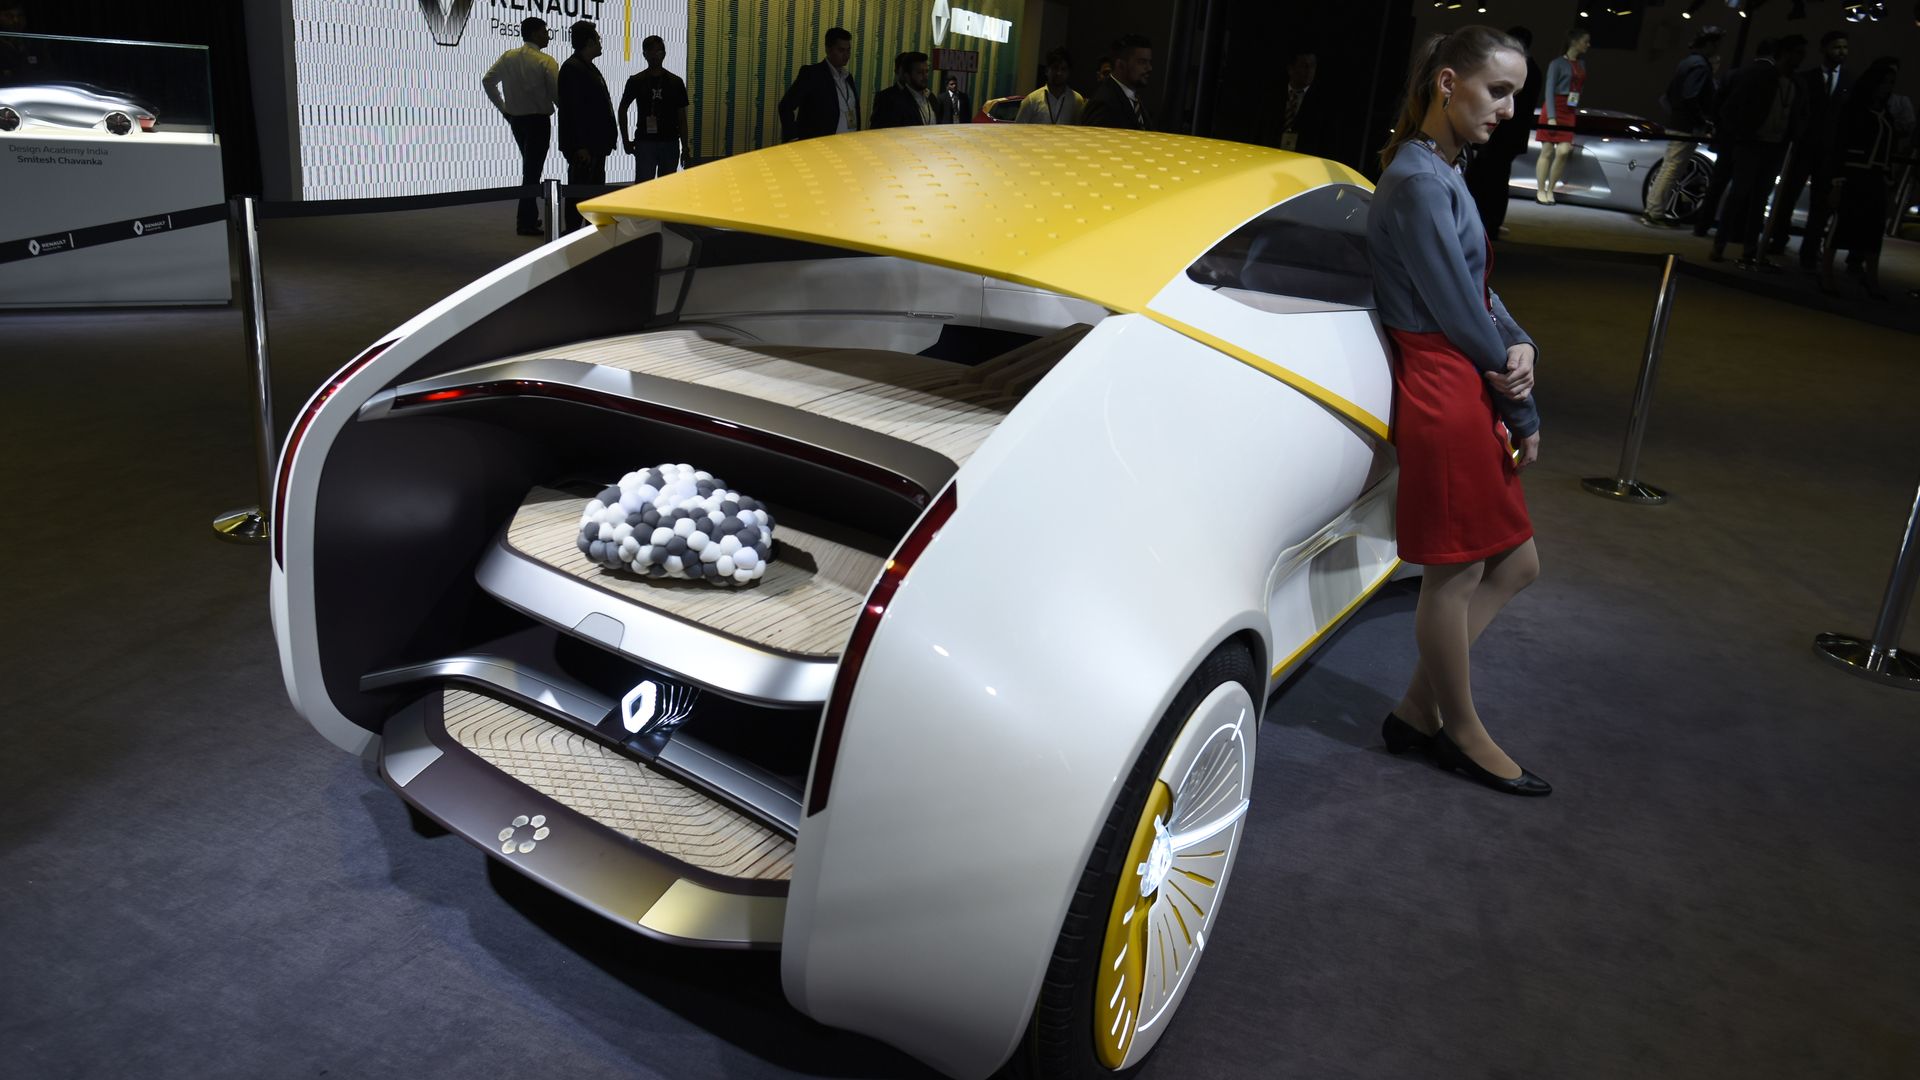 Renault electric concept car Zoe at 2018 car expo